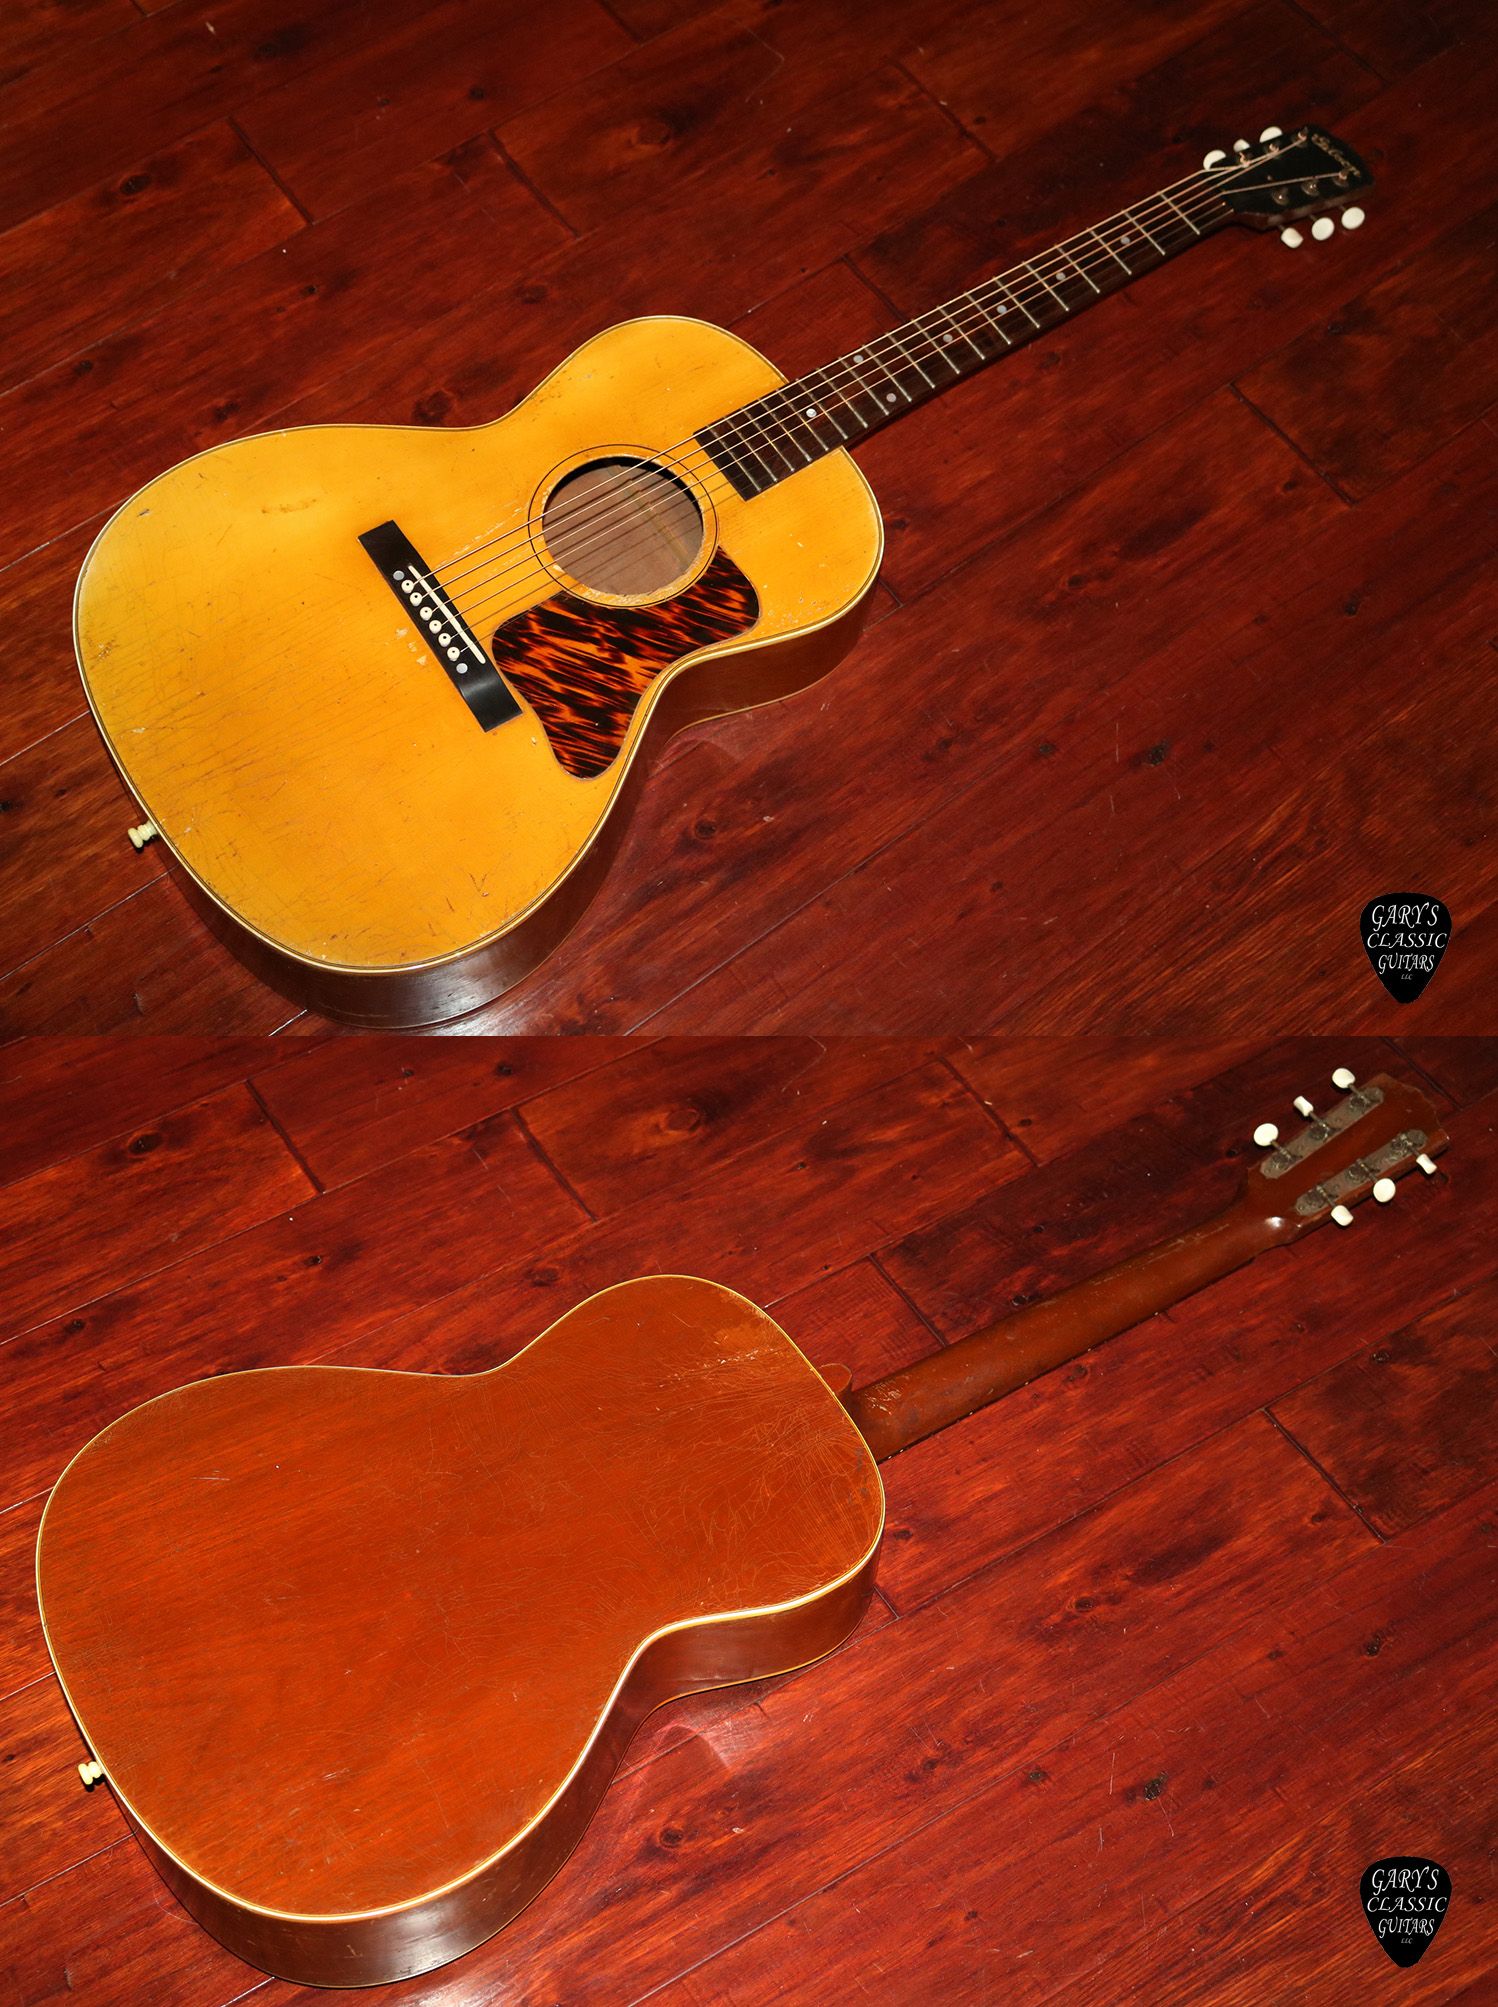 1942 Gibson L-00 Rare natural finish | Garys Classic Guitars